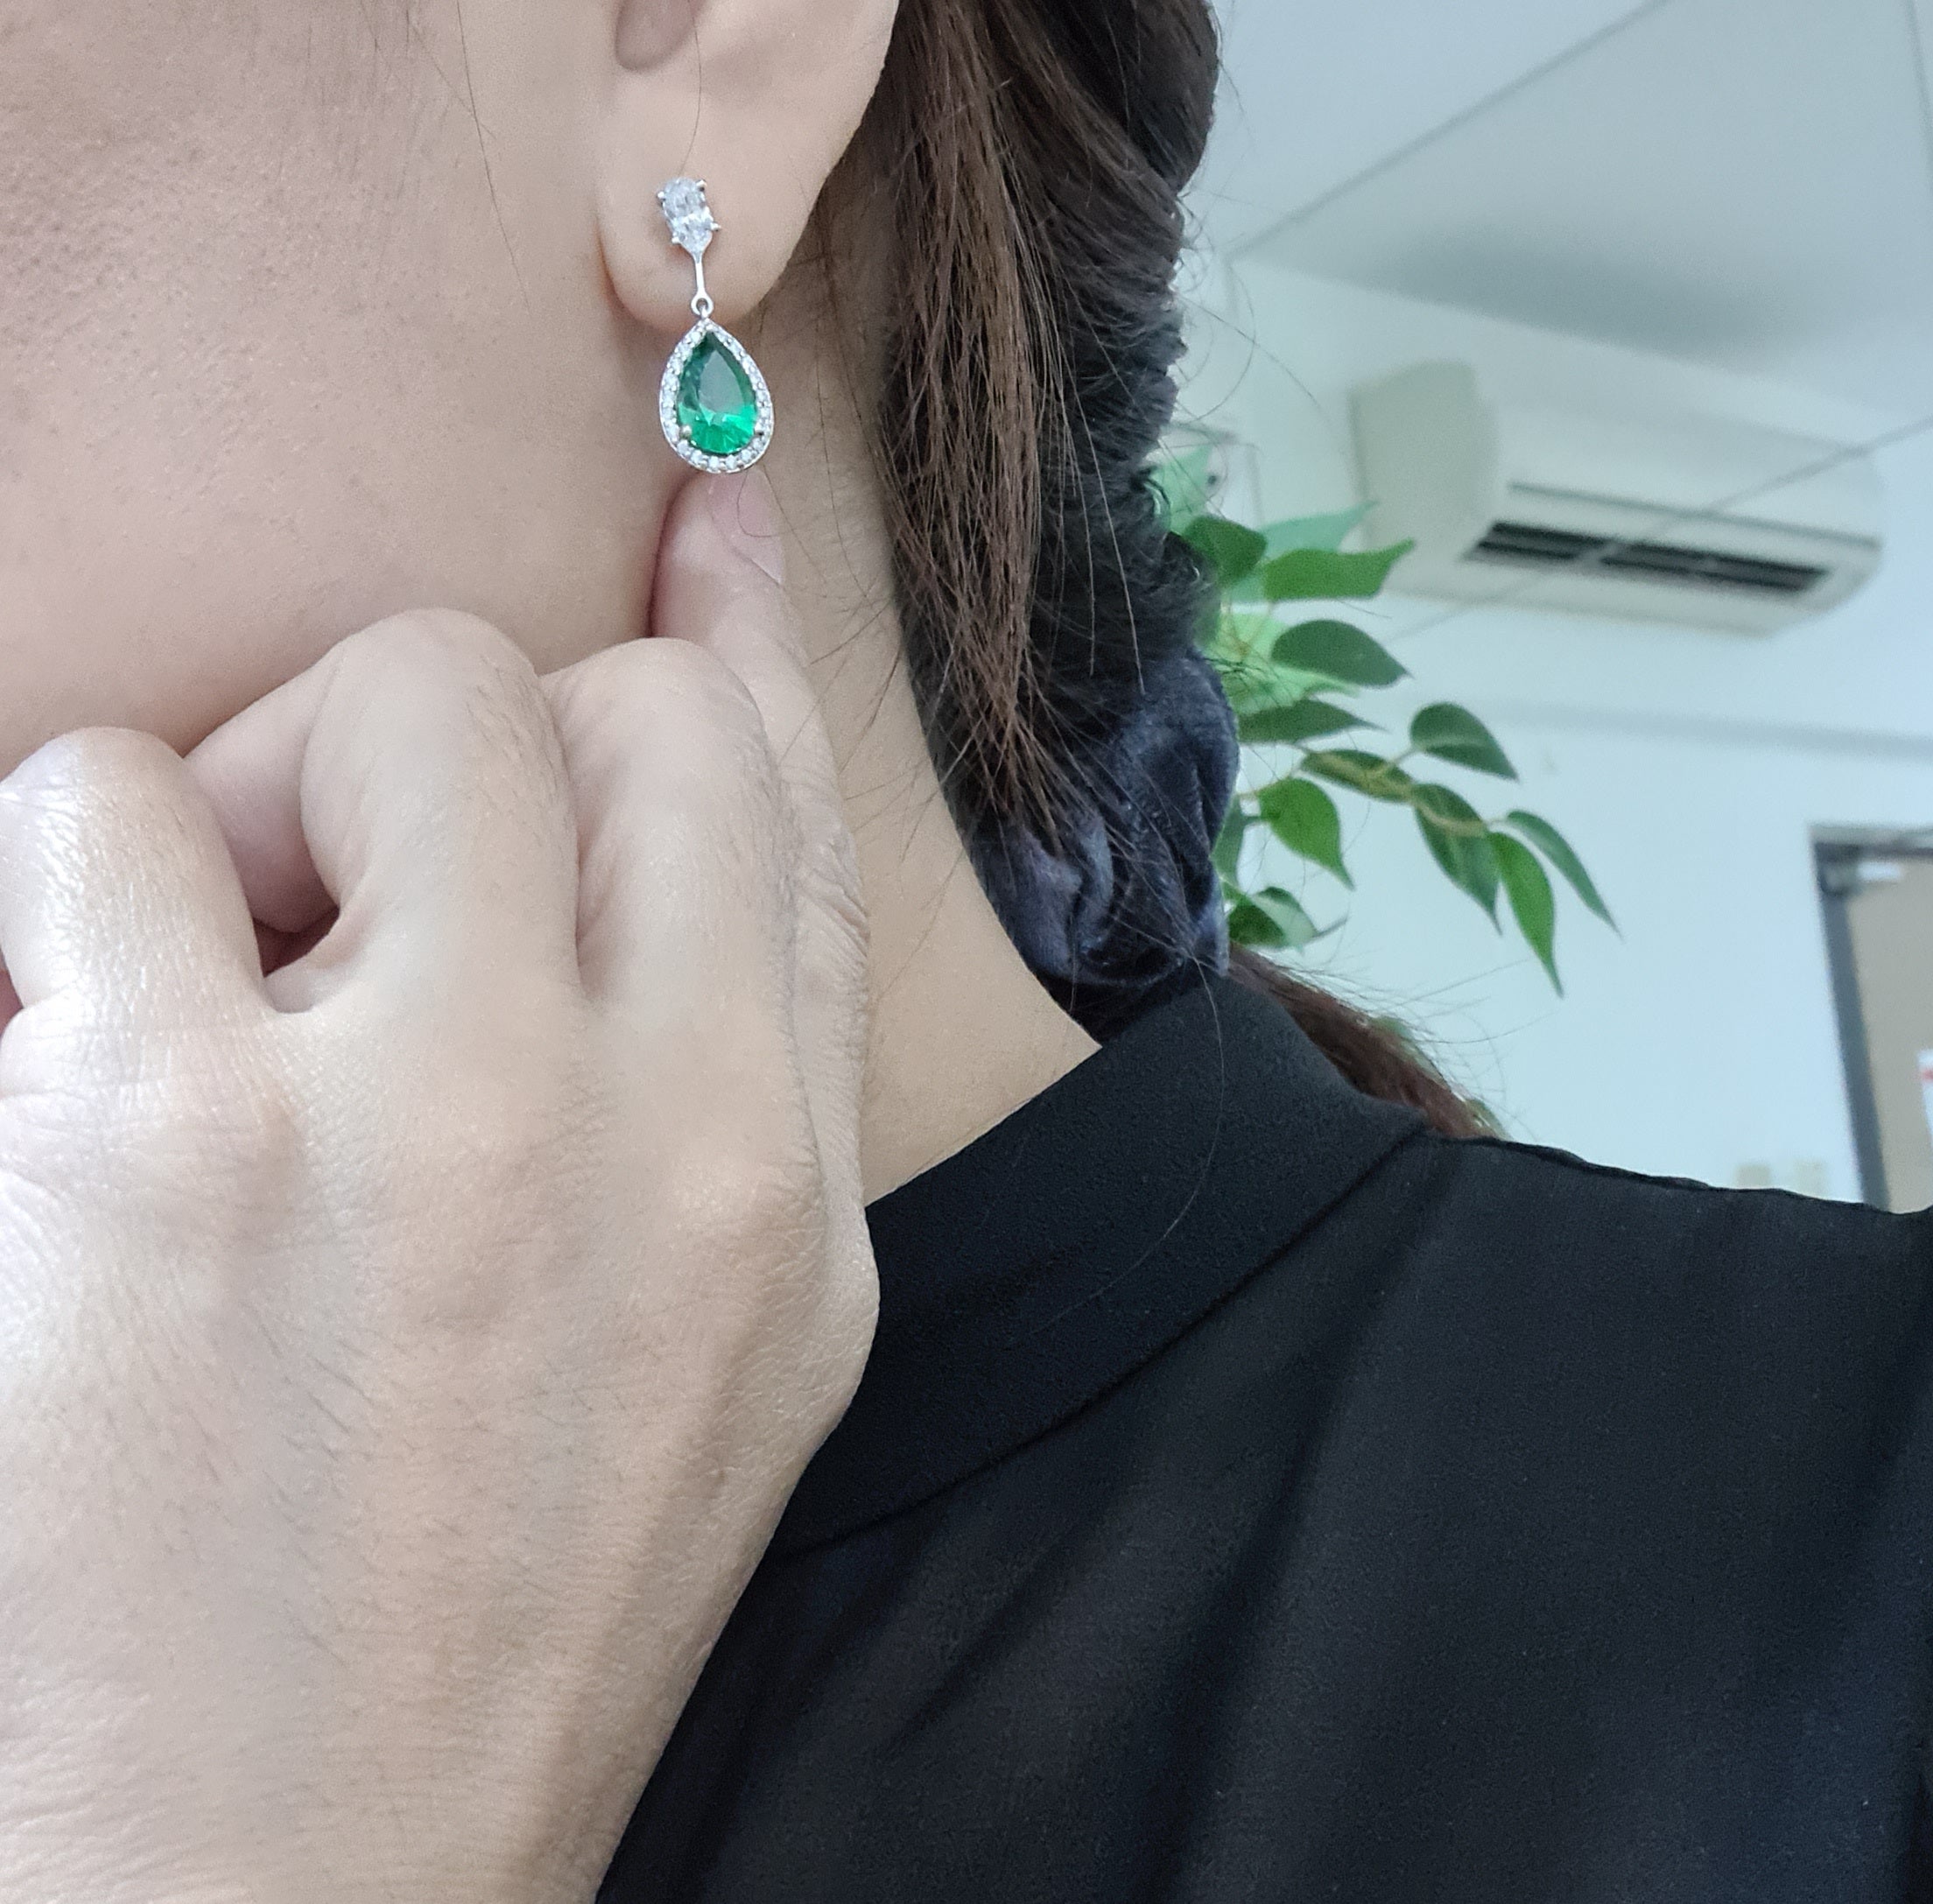 Teardrops Simulated Emerald with Stunning Oval Diamond Simulants Earrings